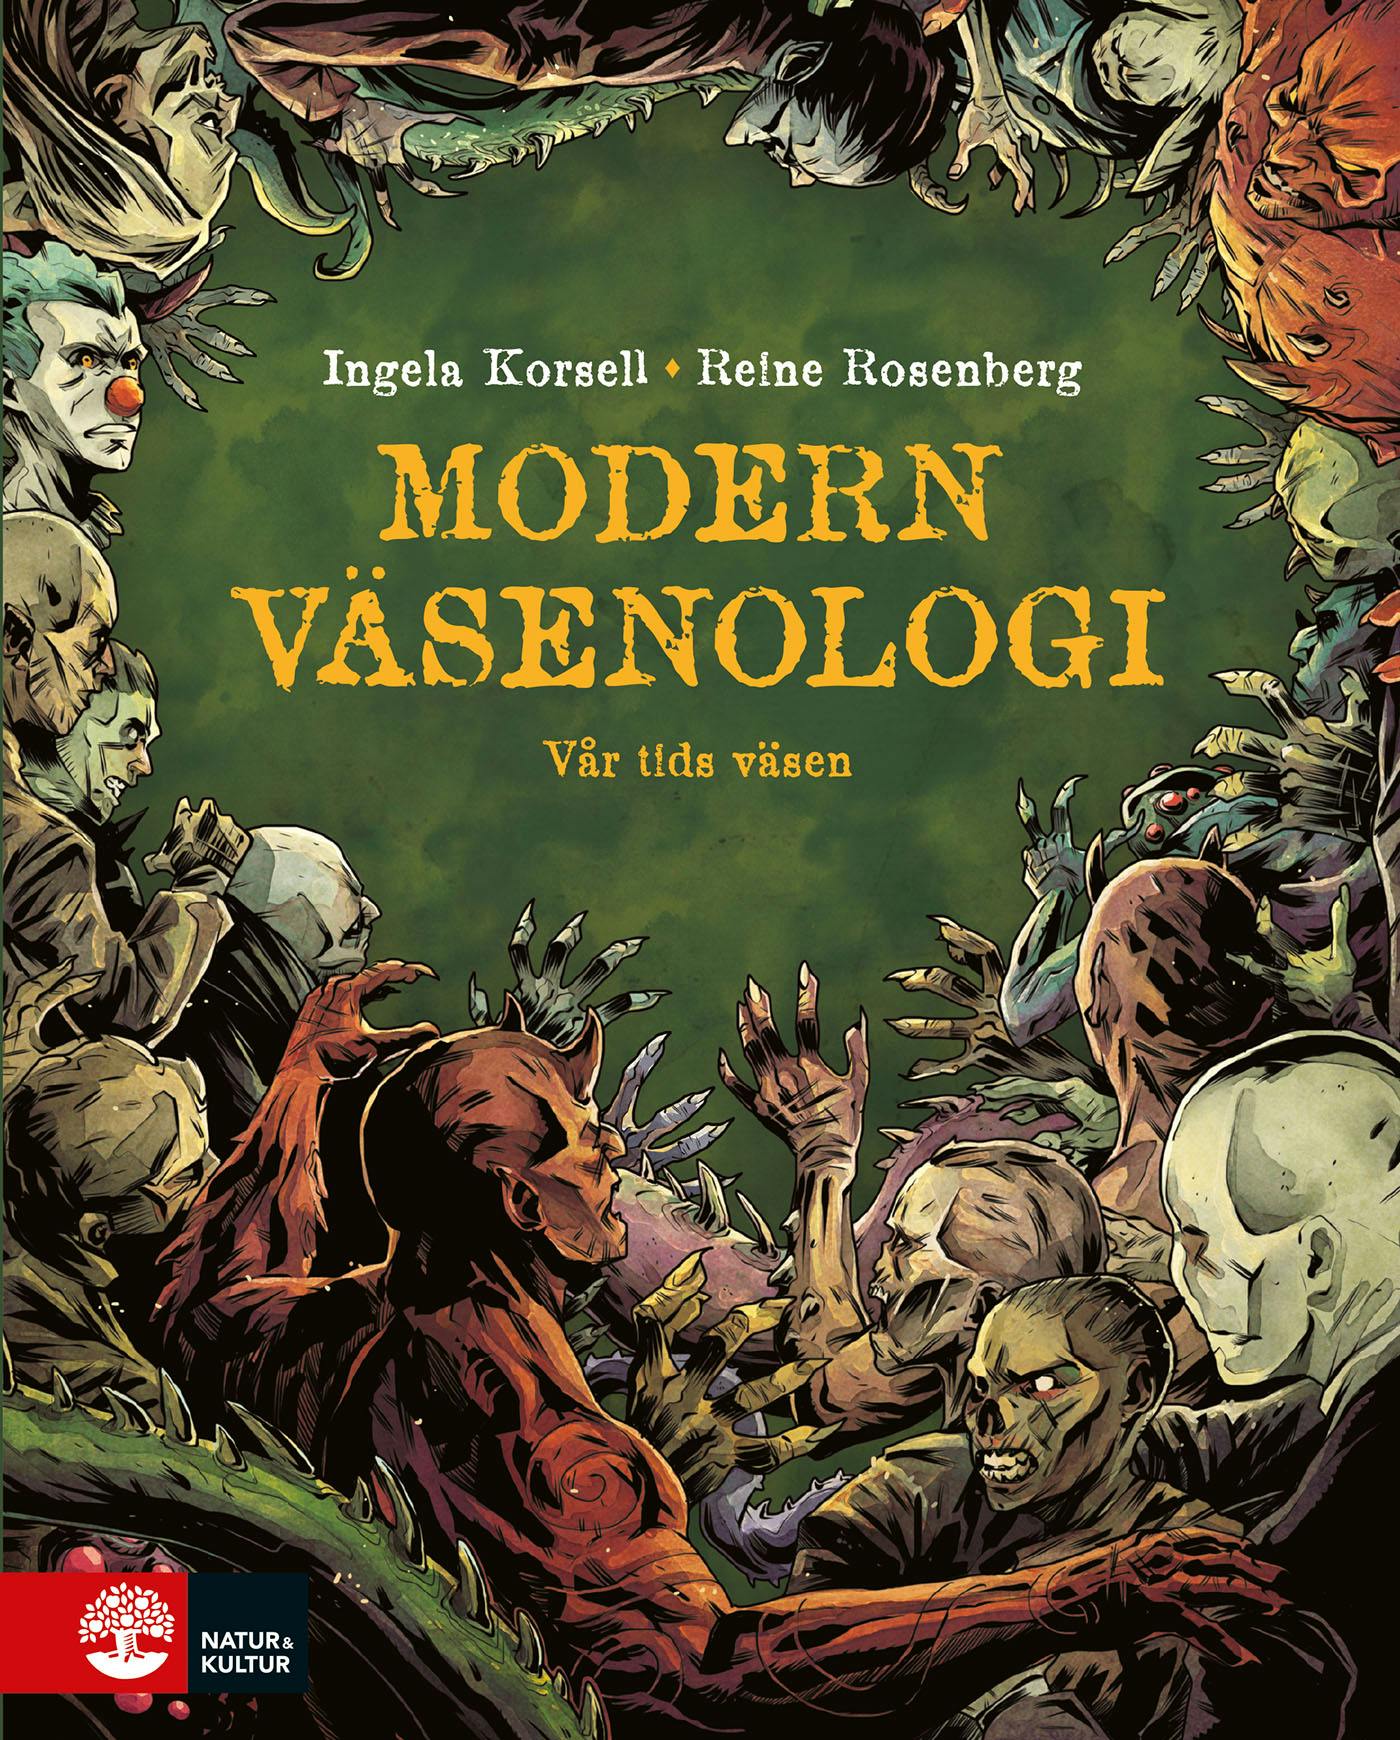 Modern väsenologi - Ingela Korsell